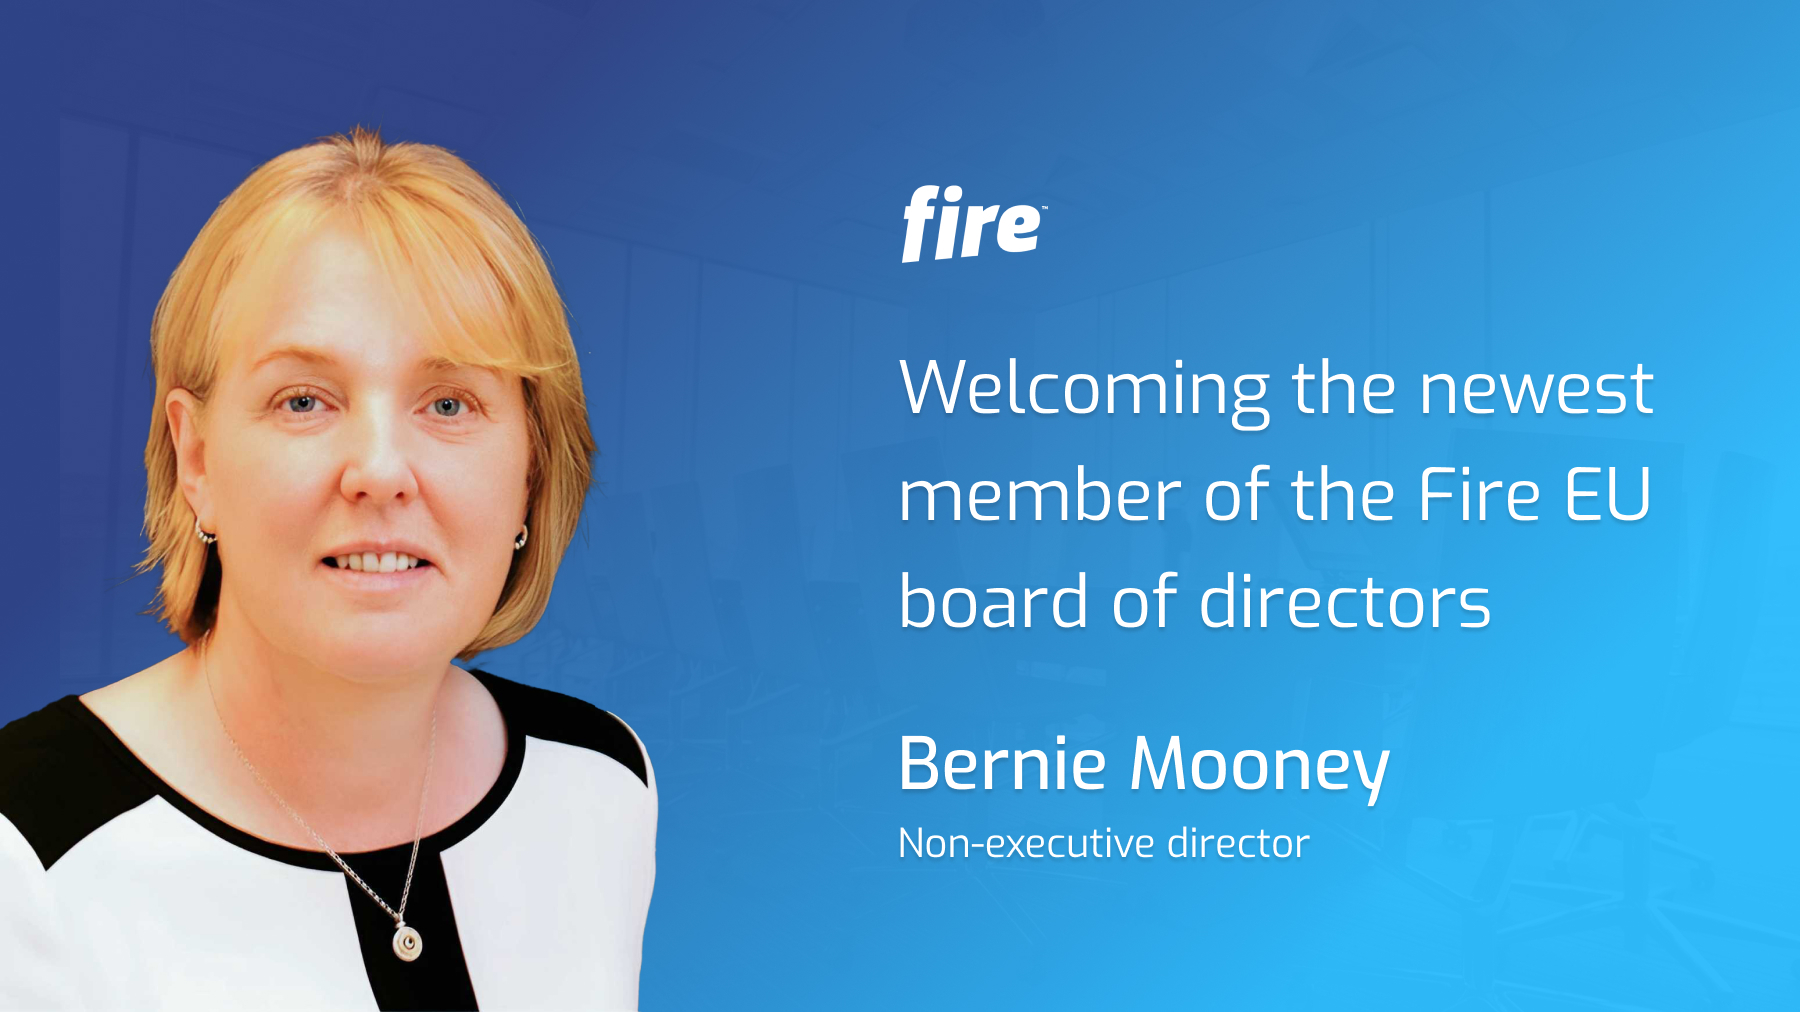 Fire welcomes Bernie Mooney as non-executive director to its EU board